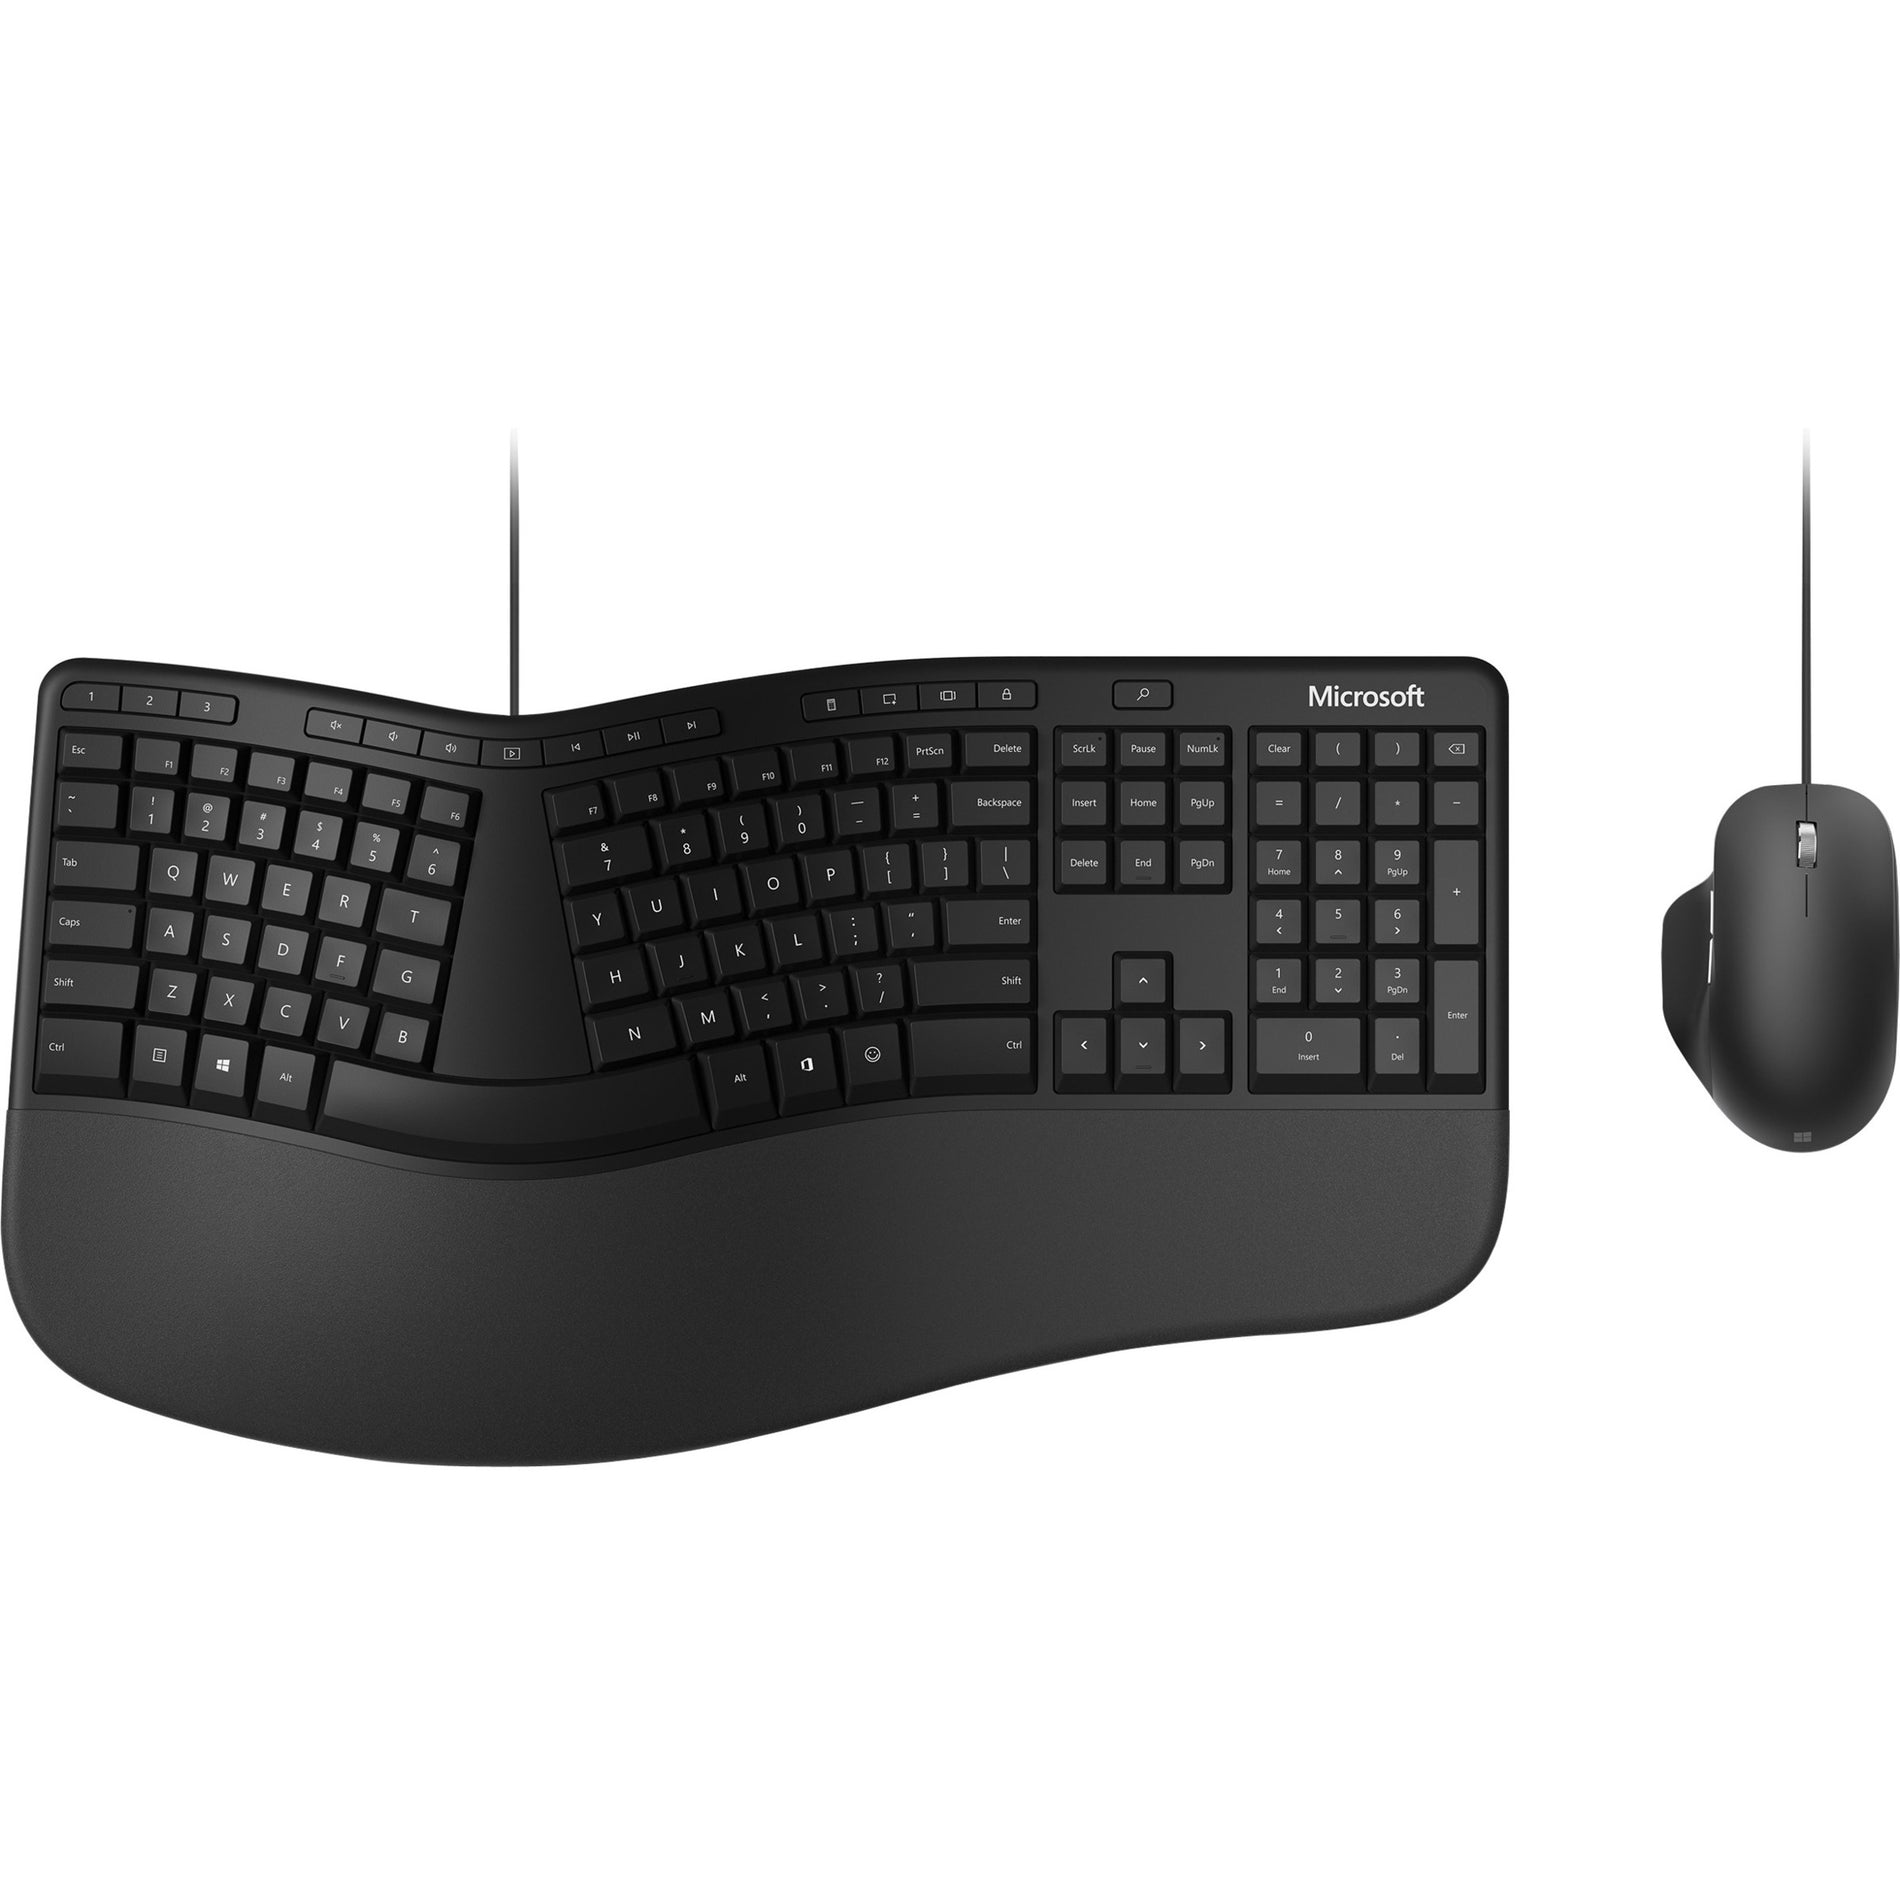 Microsoft RJU-00001 Keyboard & Mouse, Ergonomic Split Keyboard, Slim Design, LED Indicator